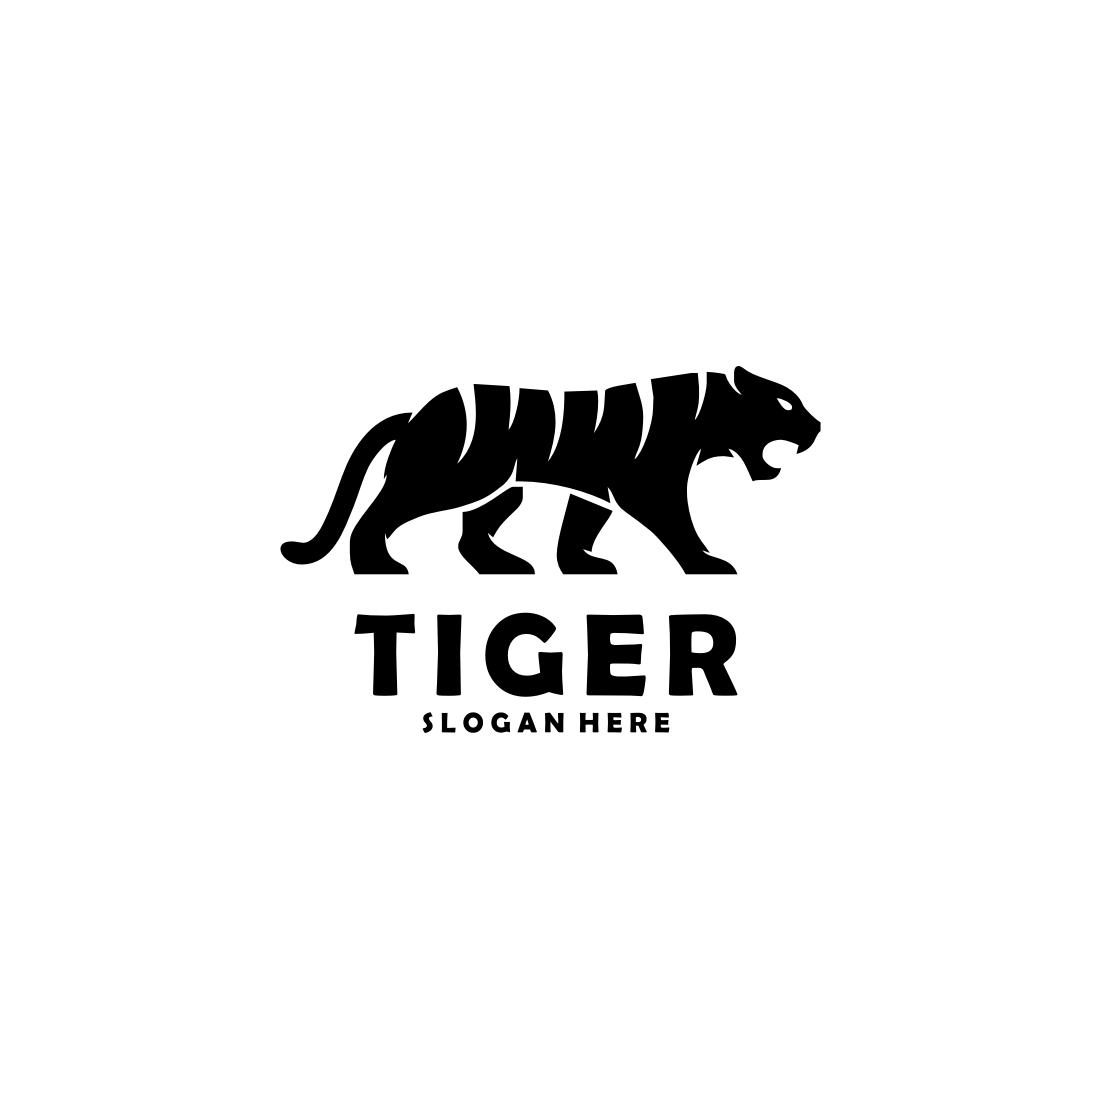 Tiger Silhouette Logo Vector Design main cover